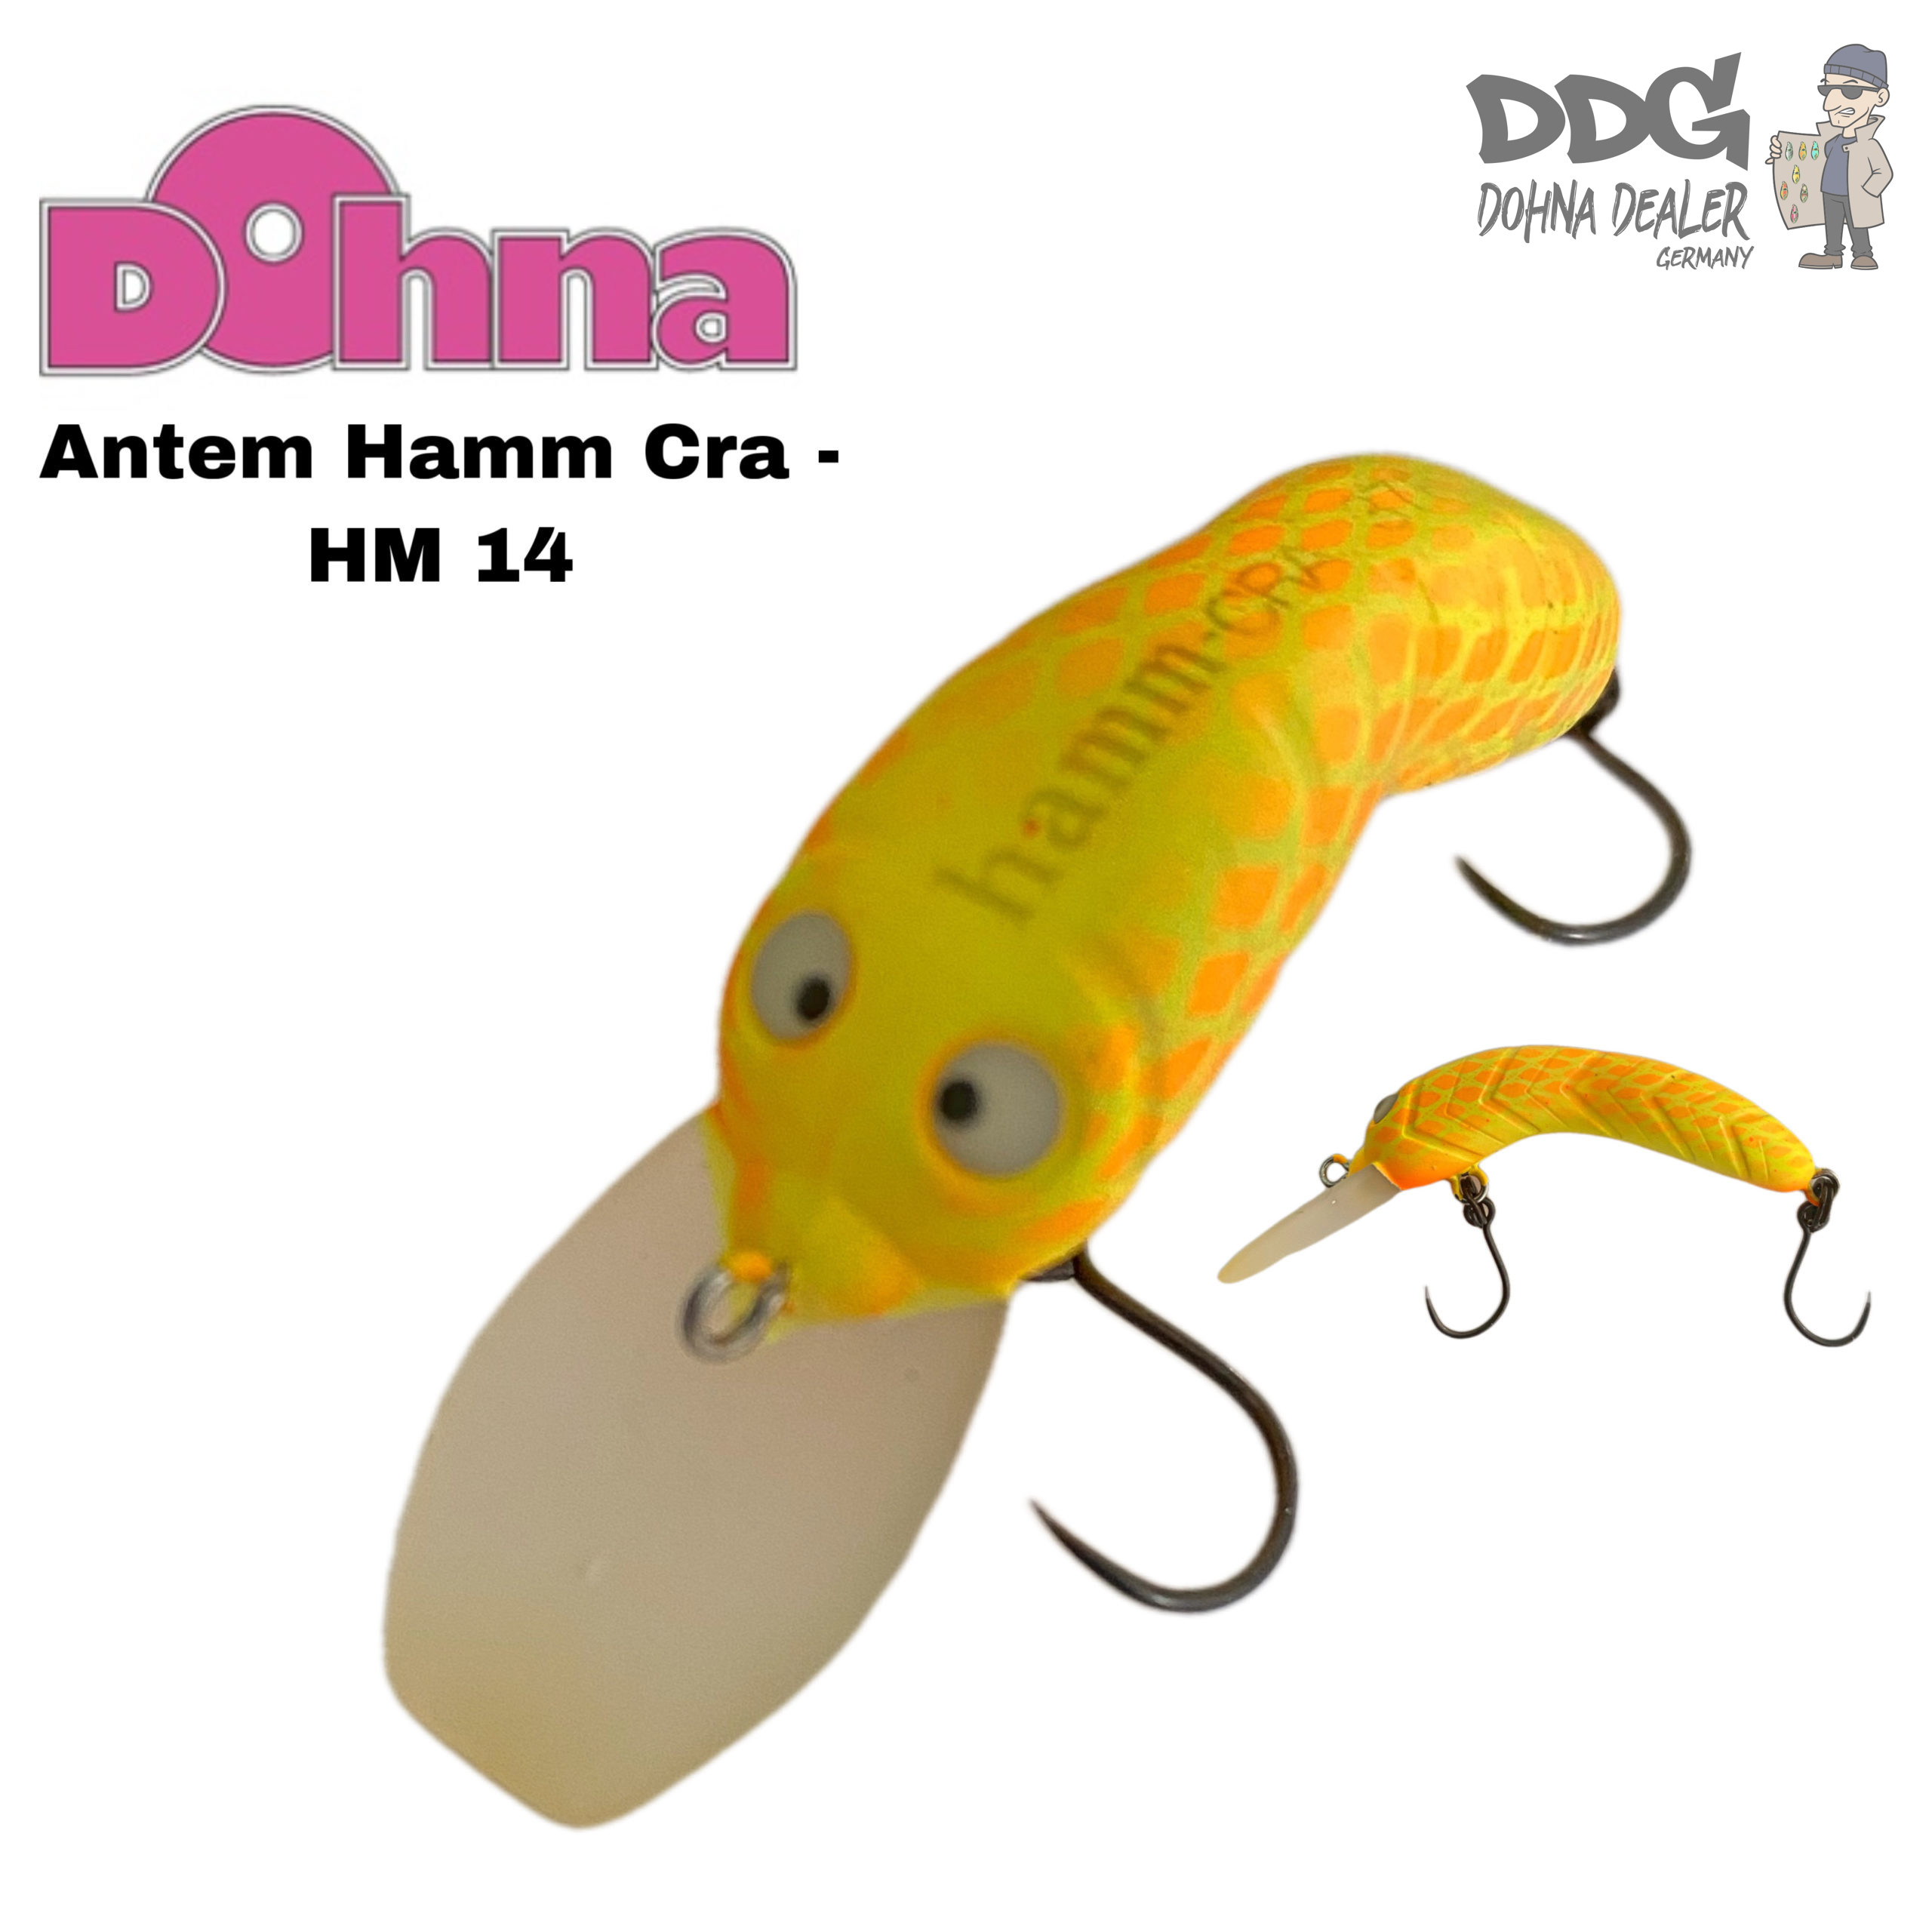 Antem Hamm CRA – HM 14